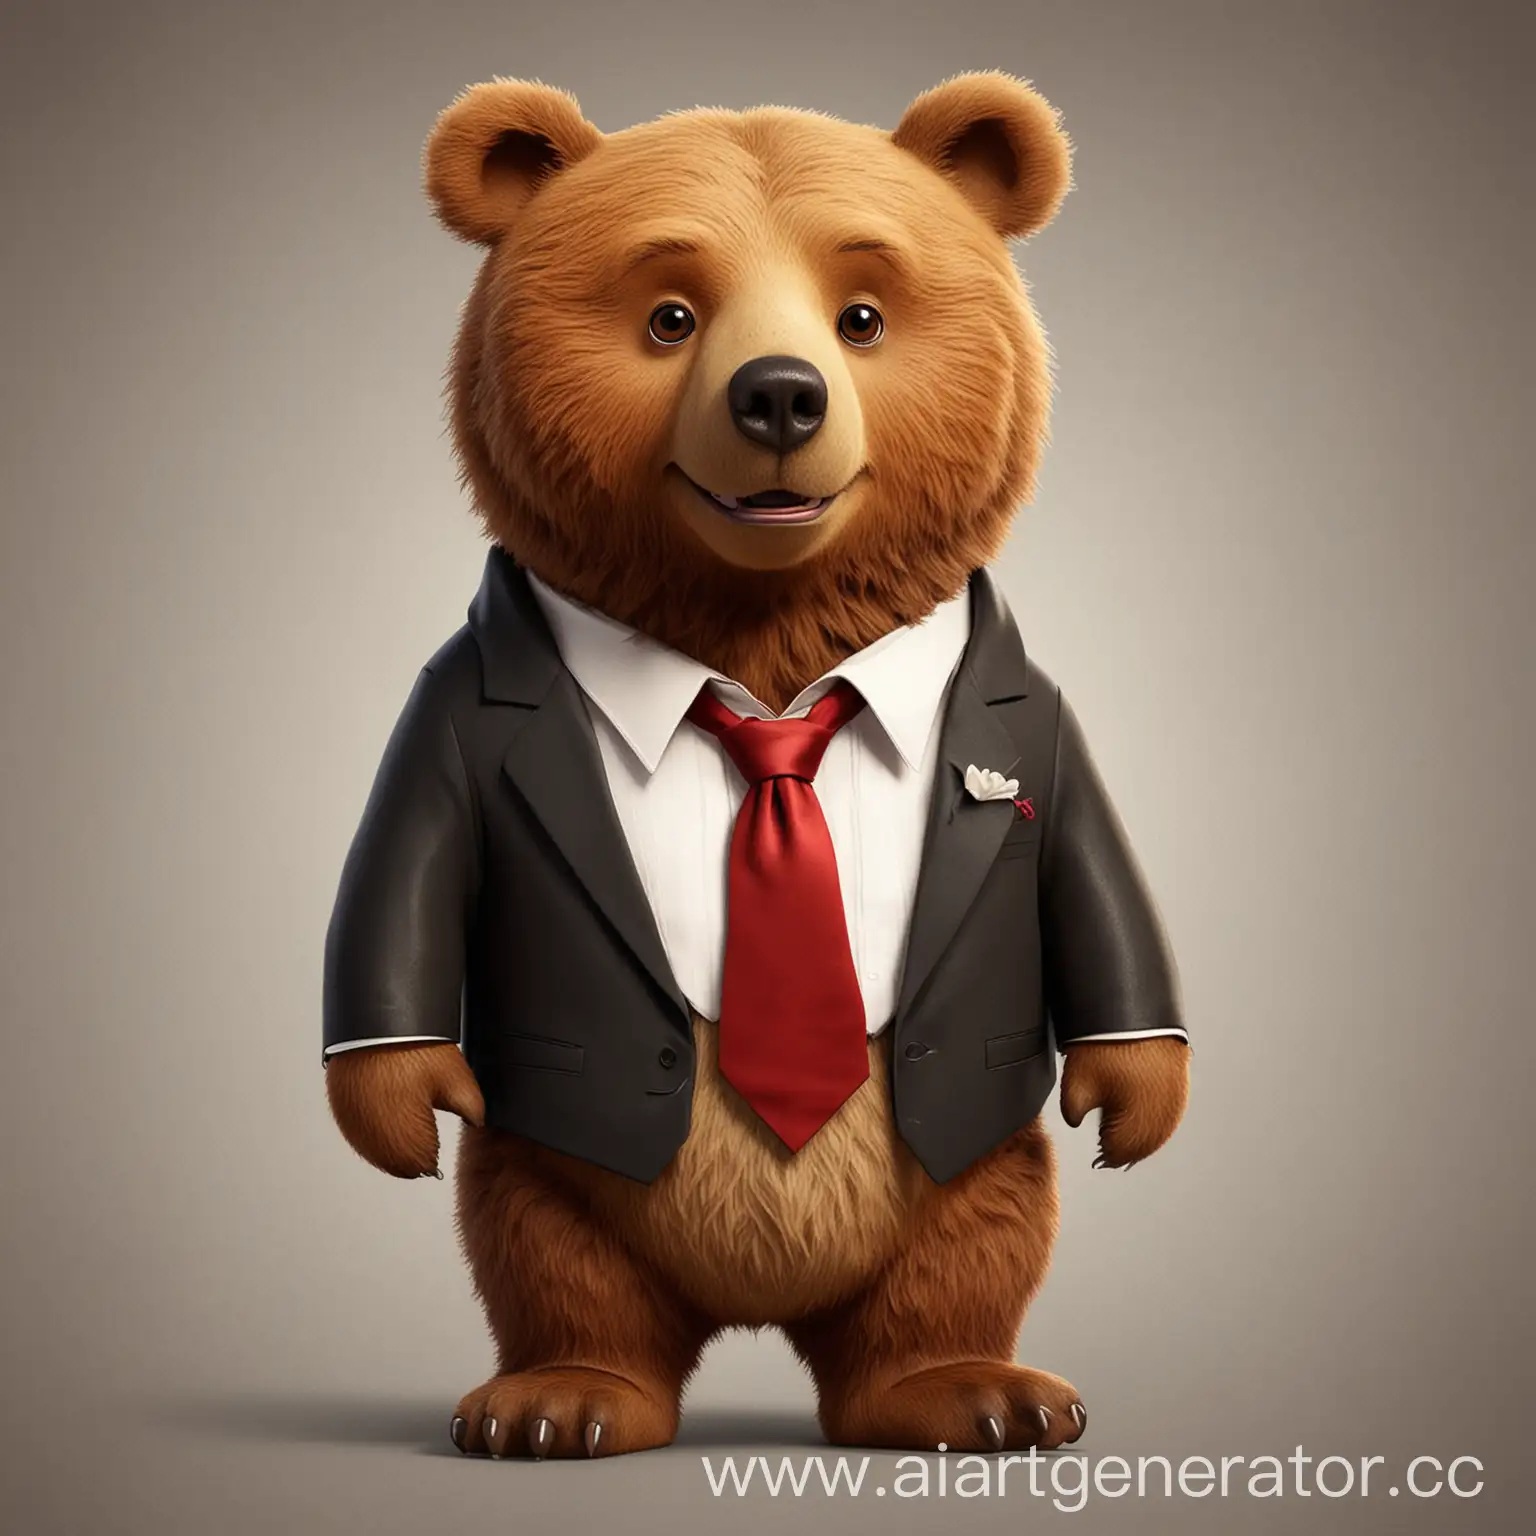 Elegant-Cartoon-Brown-Bear-in-Tuxedo-and-Tie